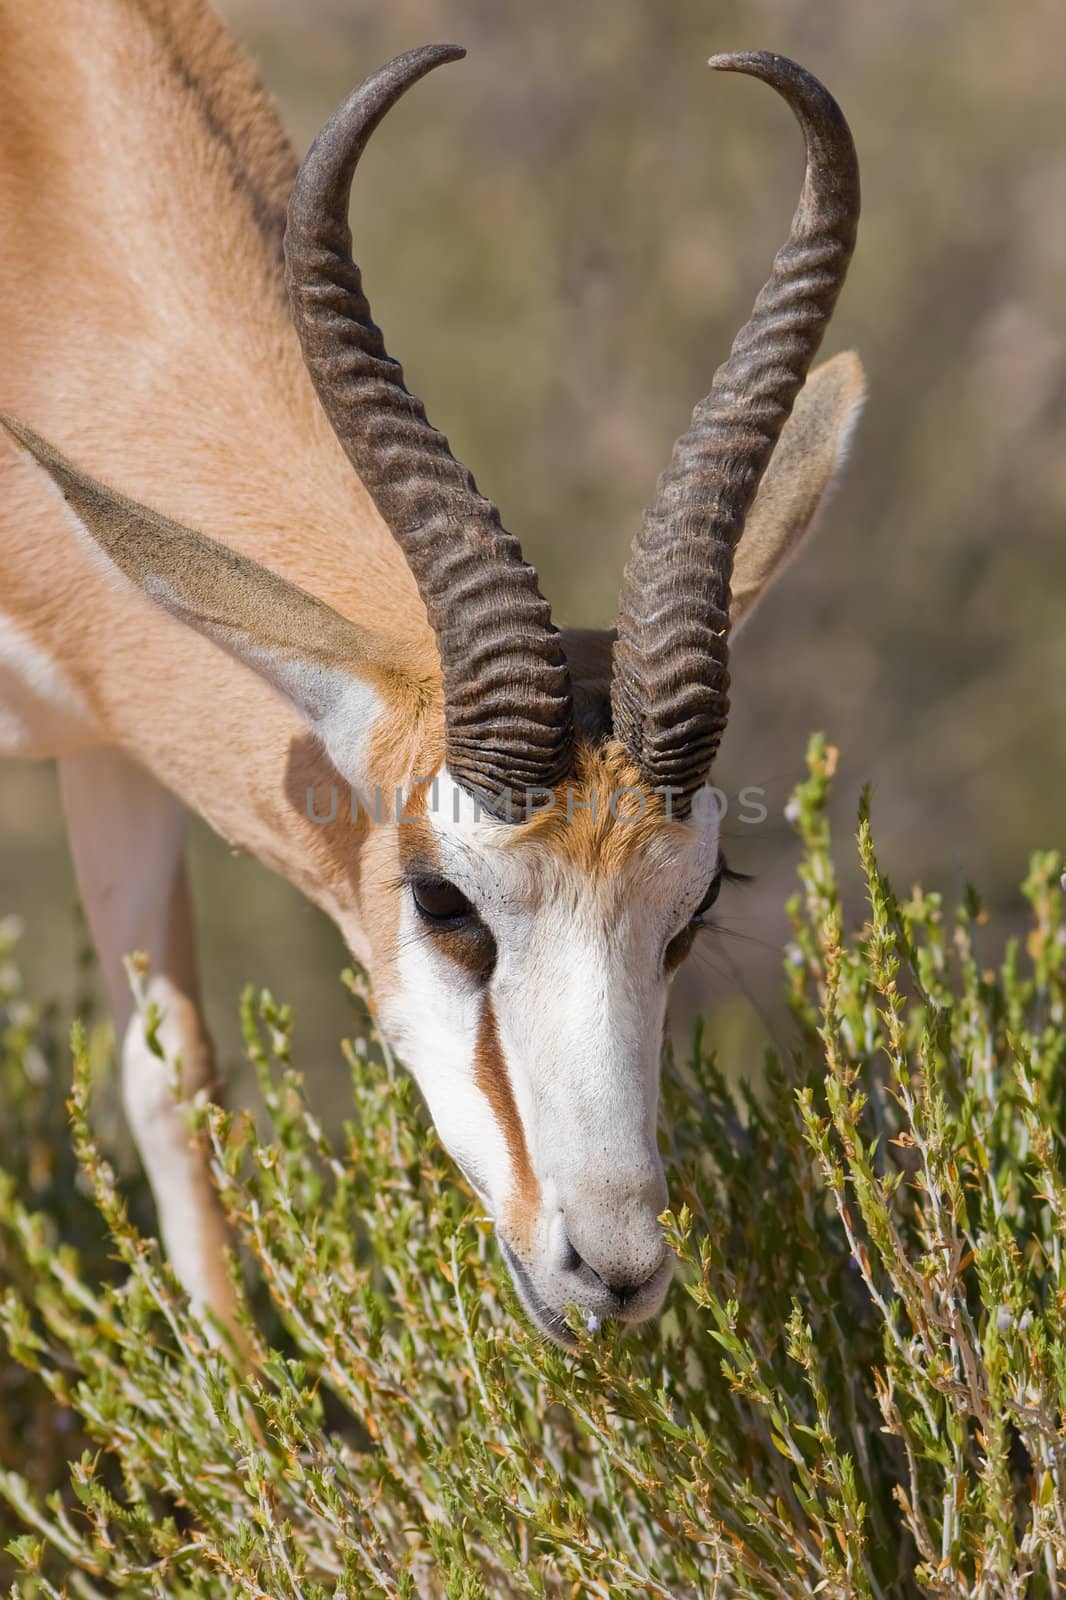 Adult Male springbok feeding on some plants